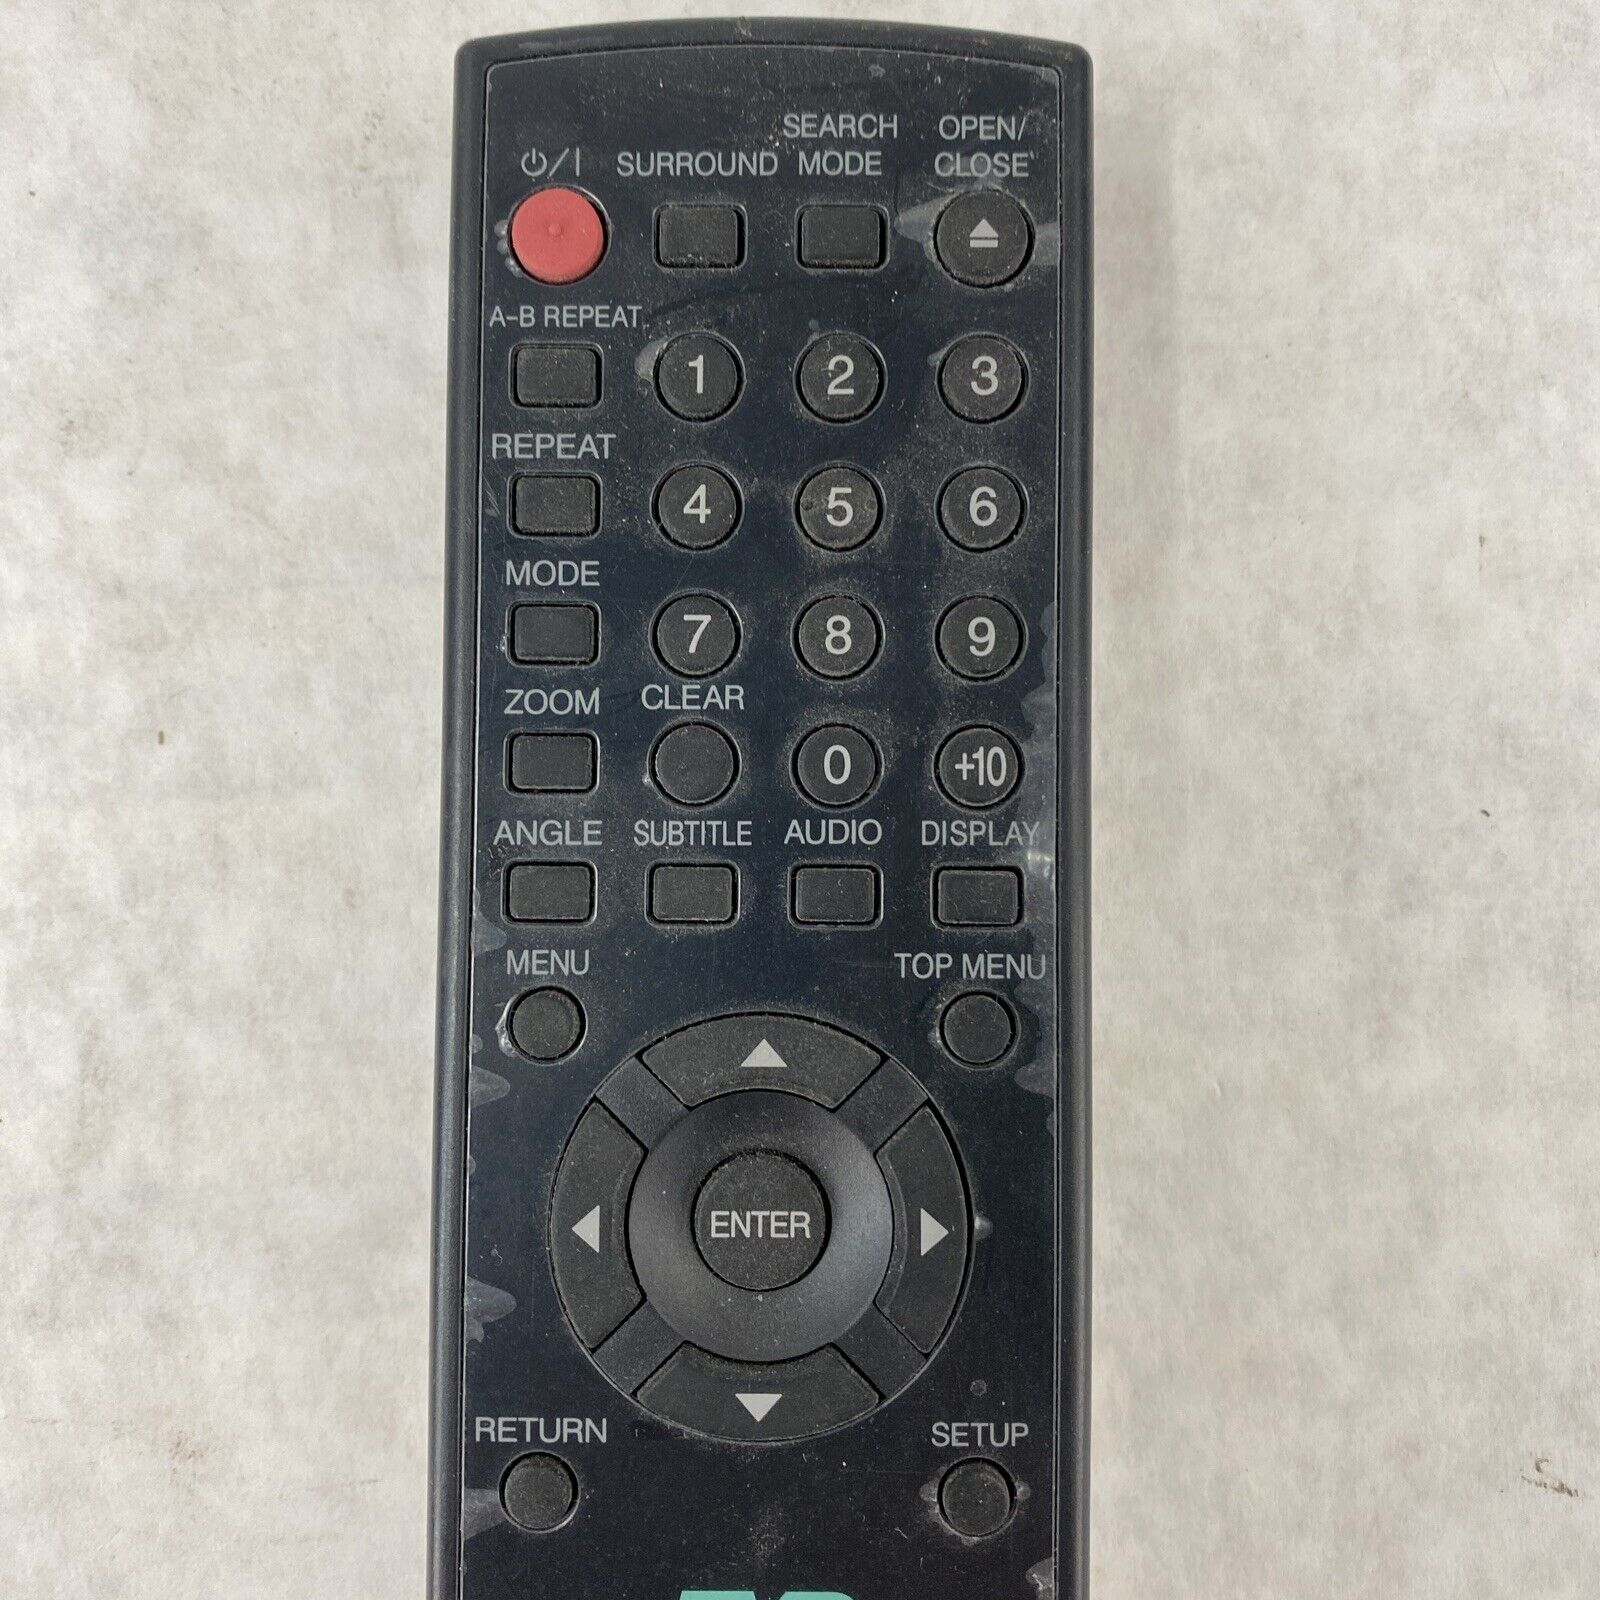 Hitachi DV-RM420 Remote Control for DV-P325U DV-P725U DV-RM420